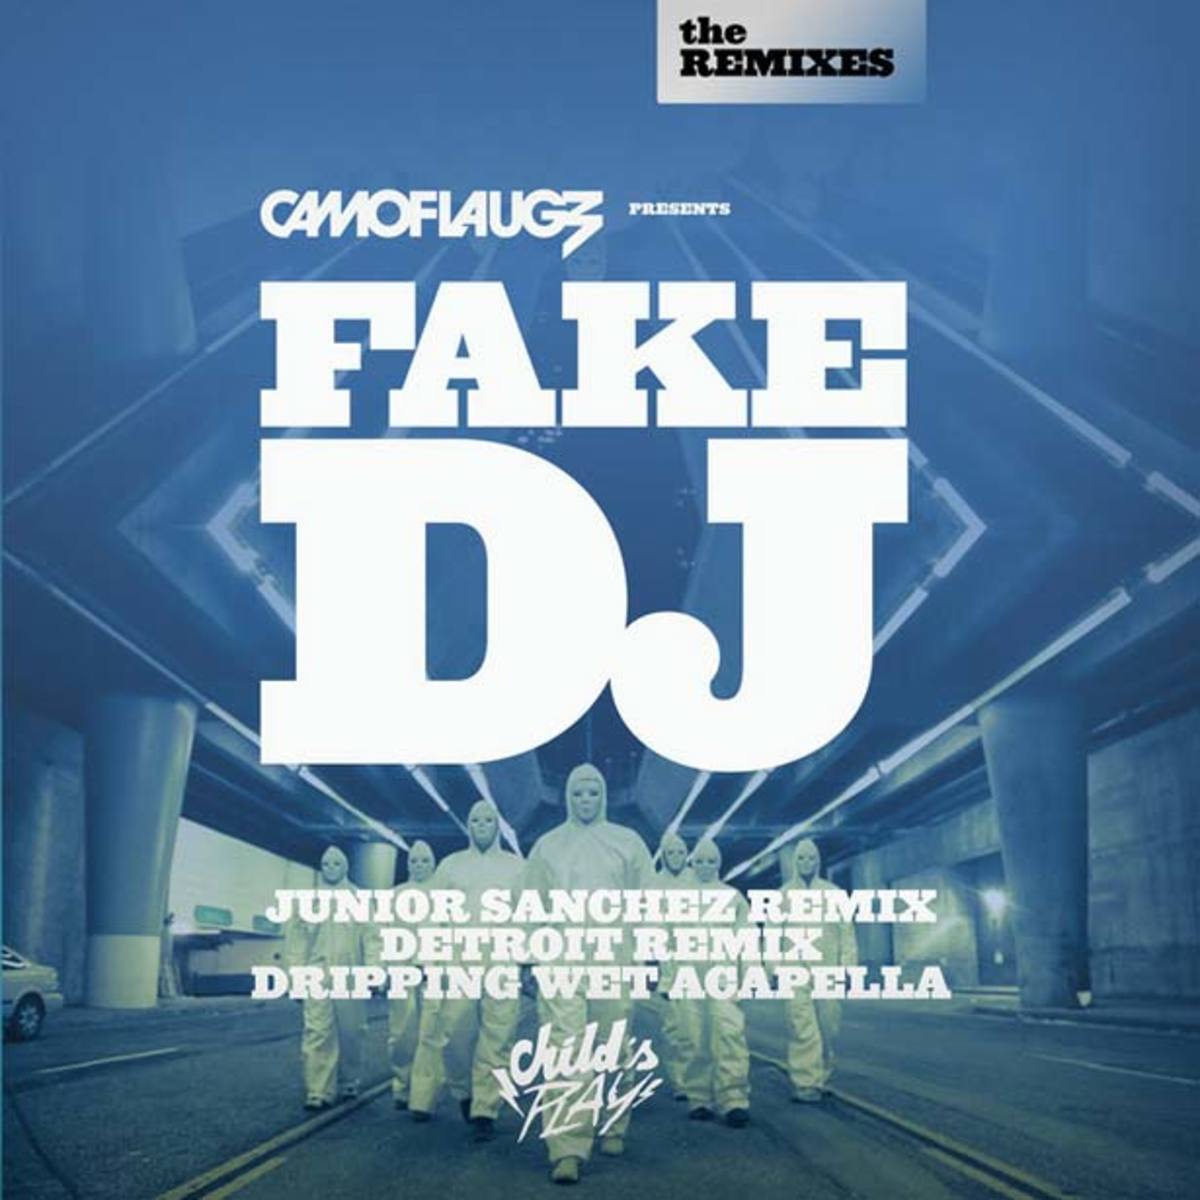 Listen: Camoflaug3 "Fake DJ" Junior Sanchez Remix